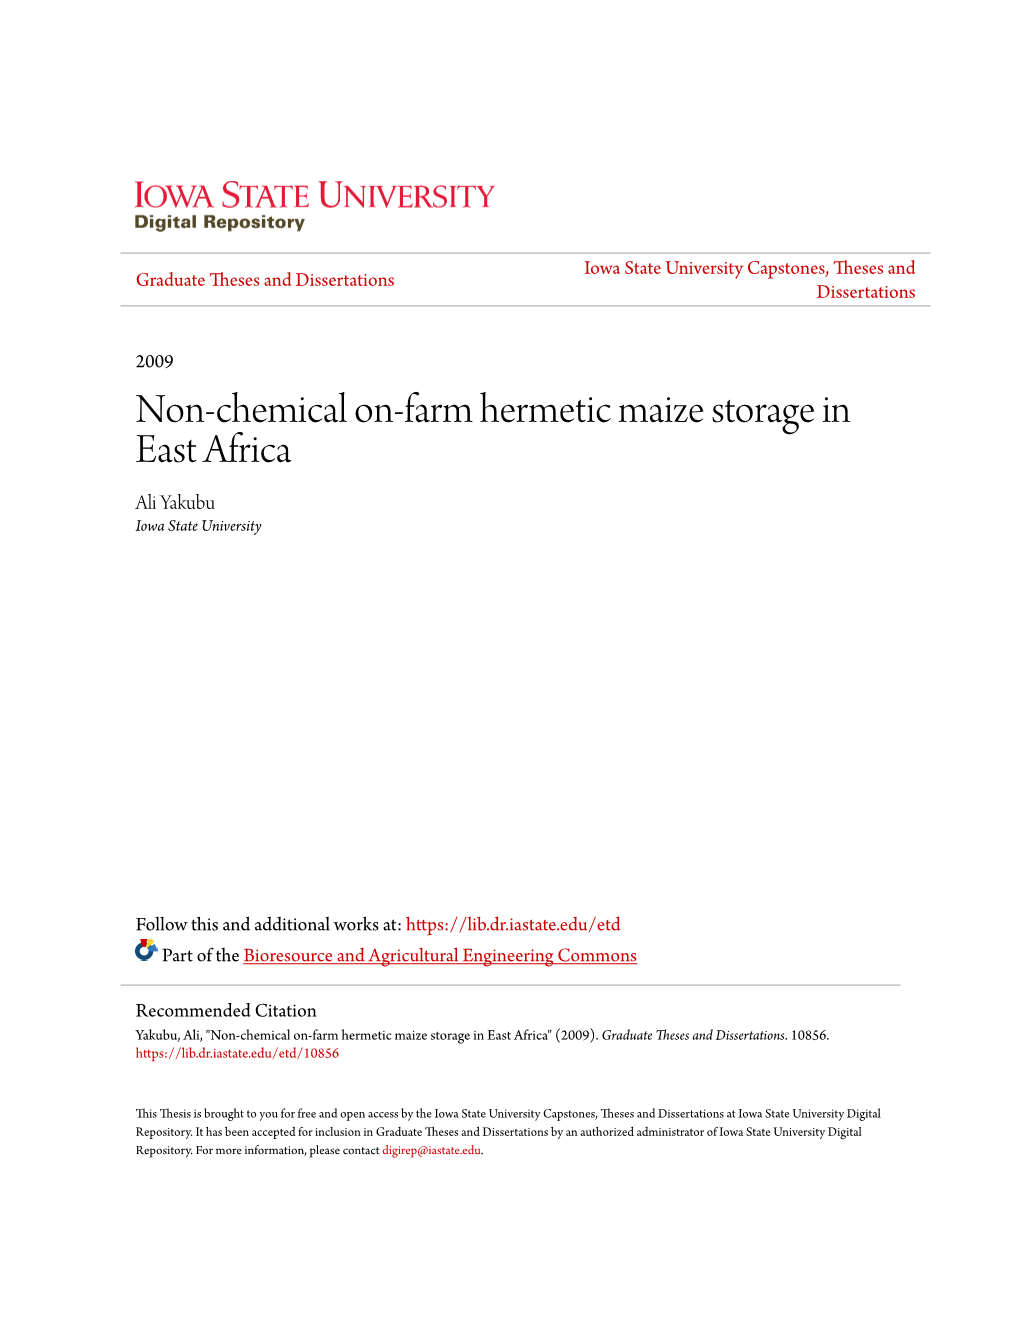 Non-Chemical On-Farm Hermetic Maize Storage in East Africa Ali Yakubu Iowa State University